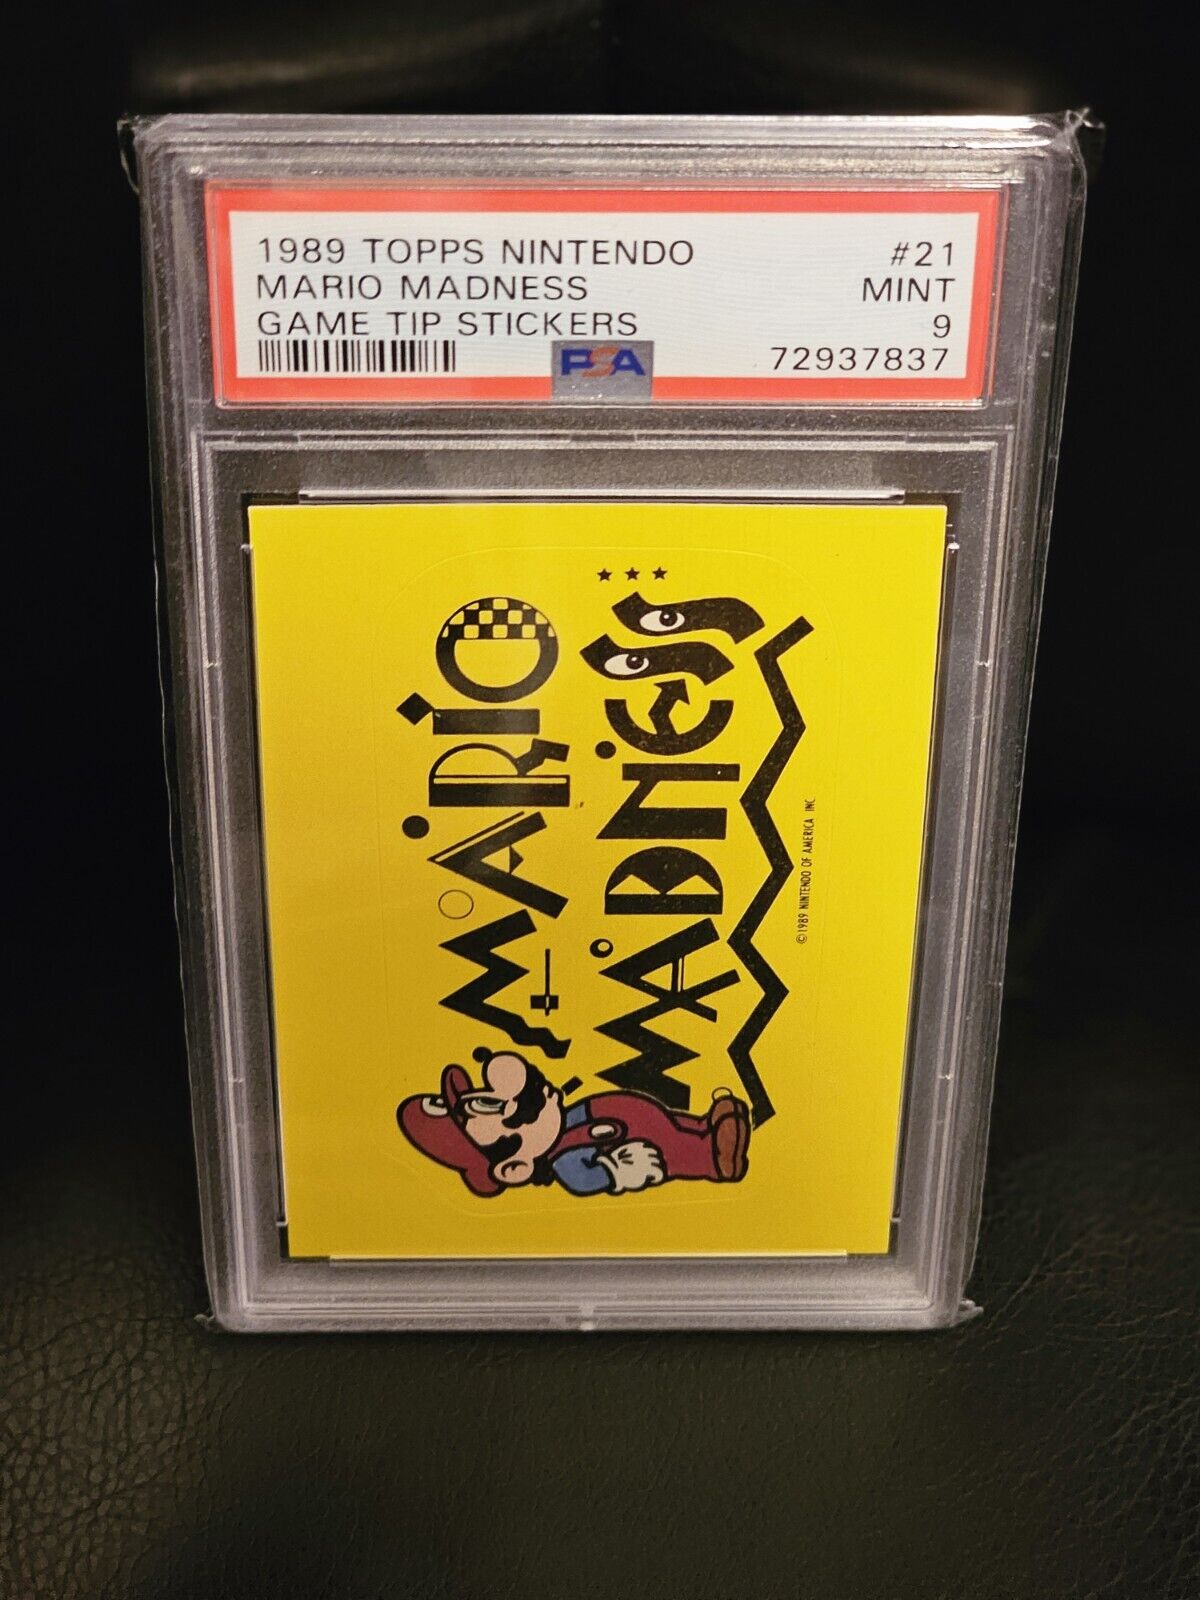 MARIO MADNESS PSA 9 #21 1989 Topps Nintendo Game Tip Stickers Nes Super Mario